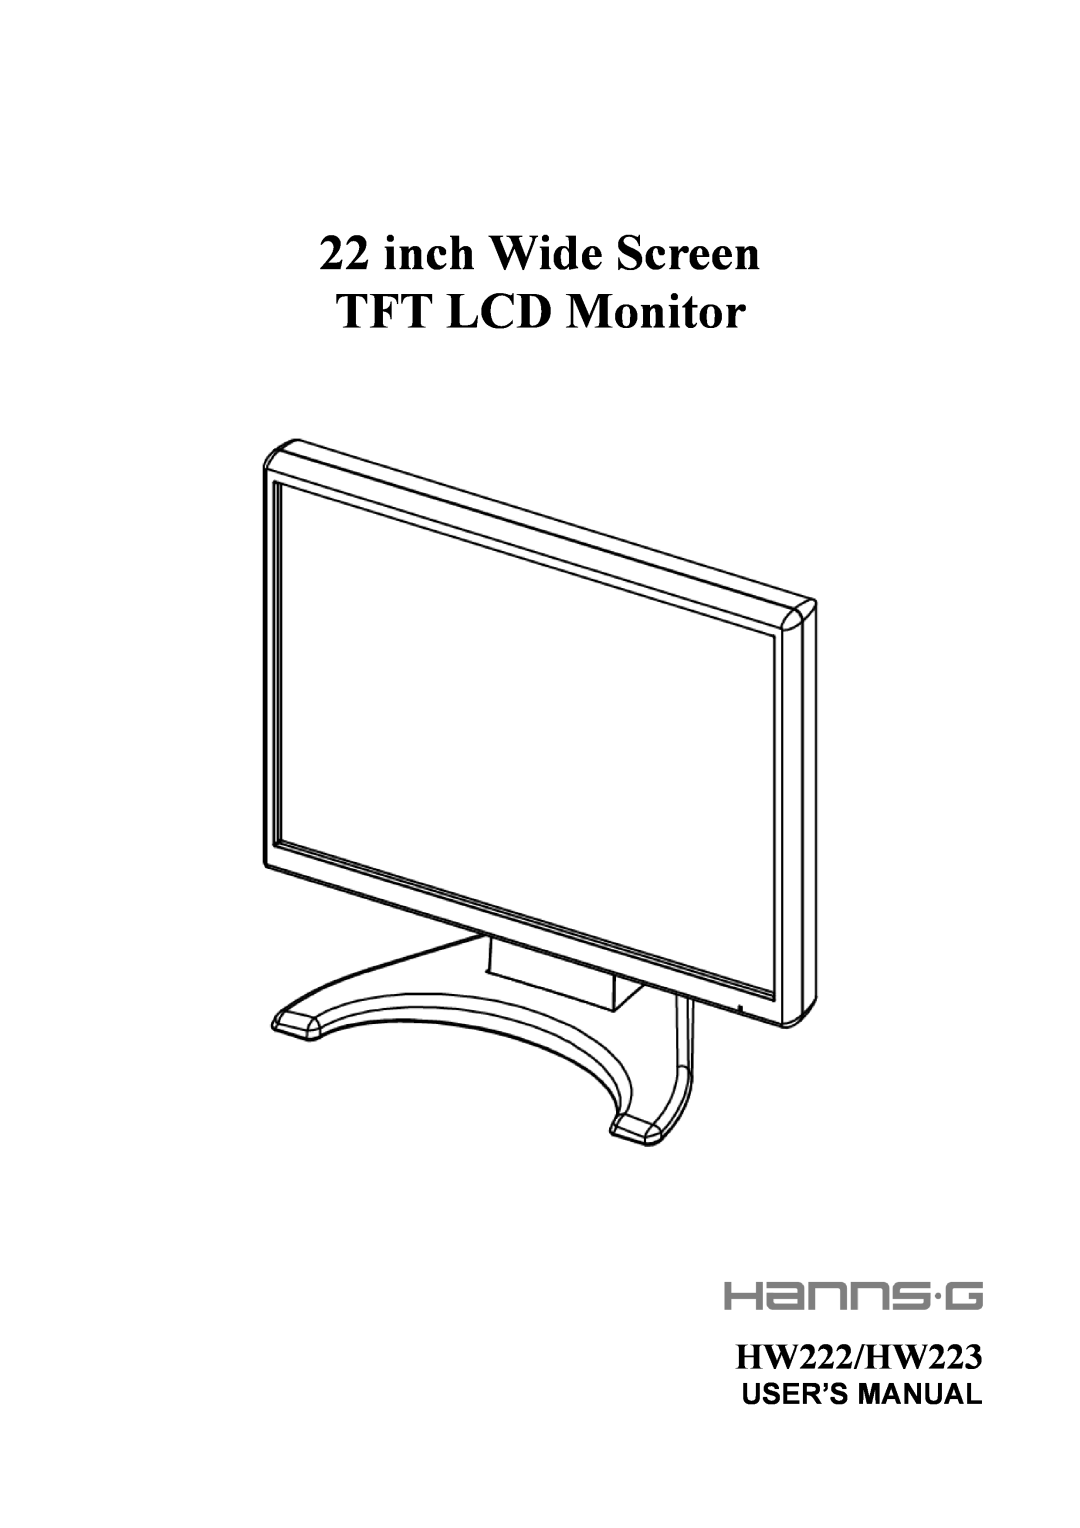 Hanns.G manual inch Wide Screen TFT LCD Monitor, HW222/HW223 